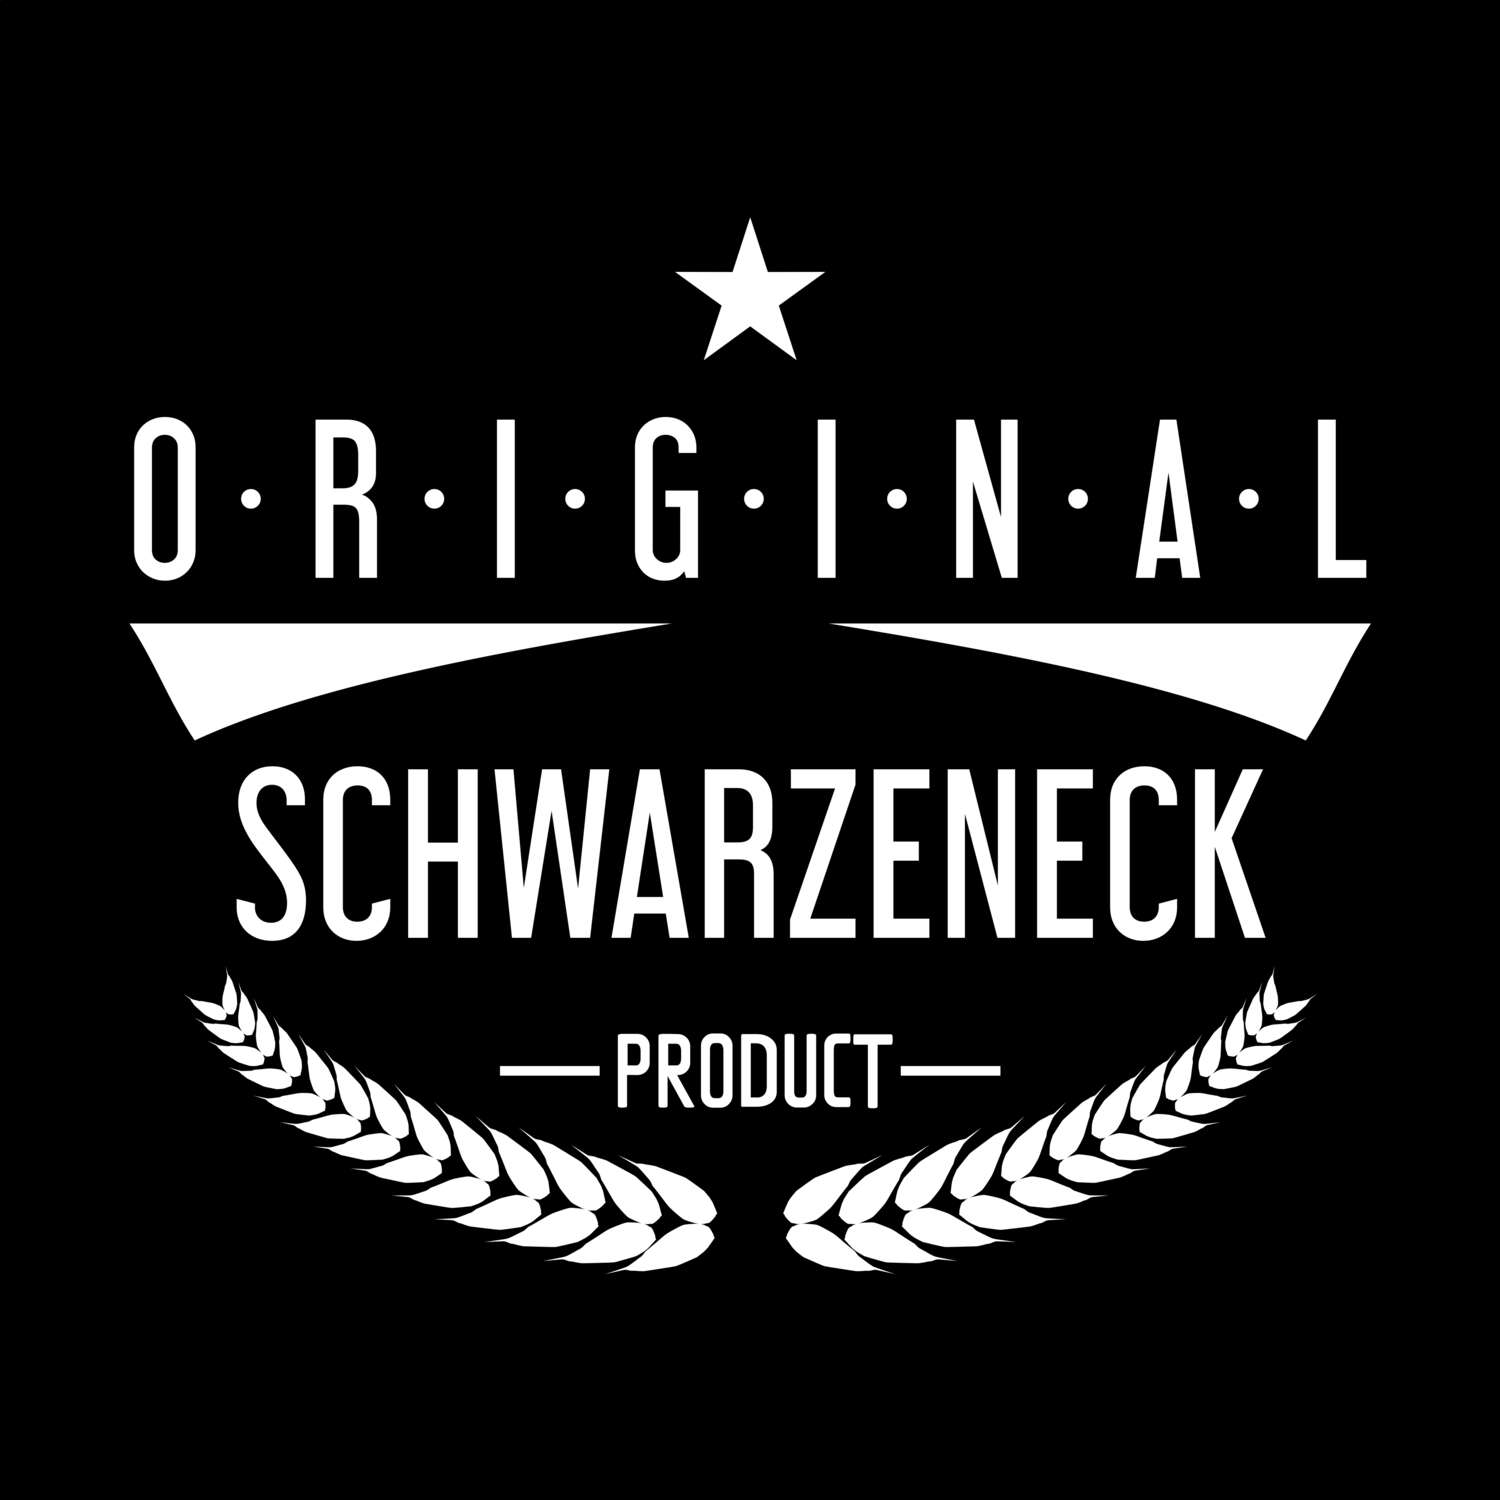 Schwarzeneck T-Shirt »Original Product«